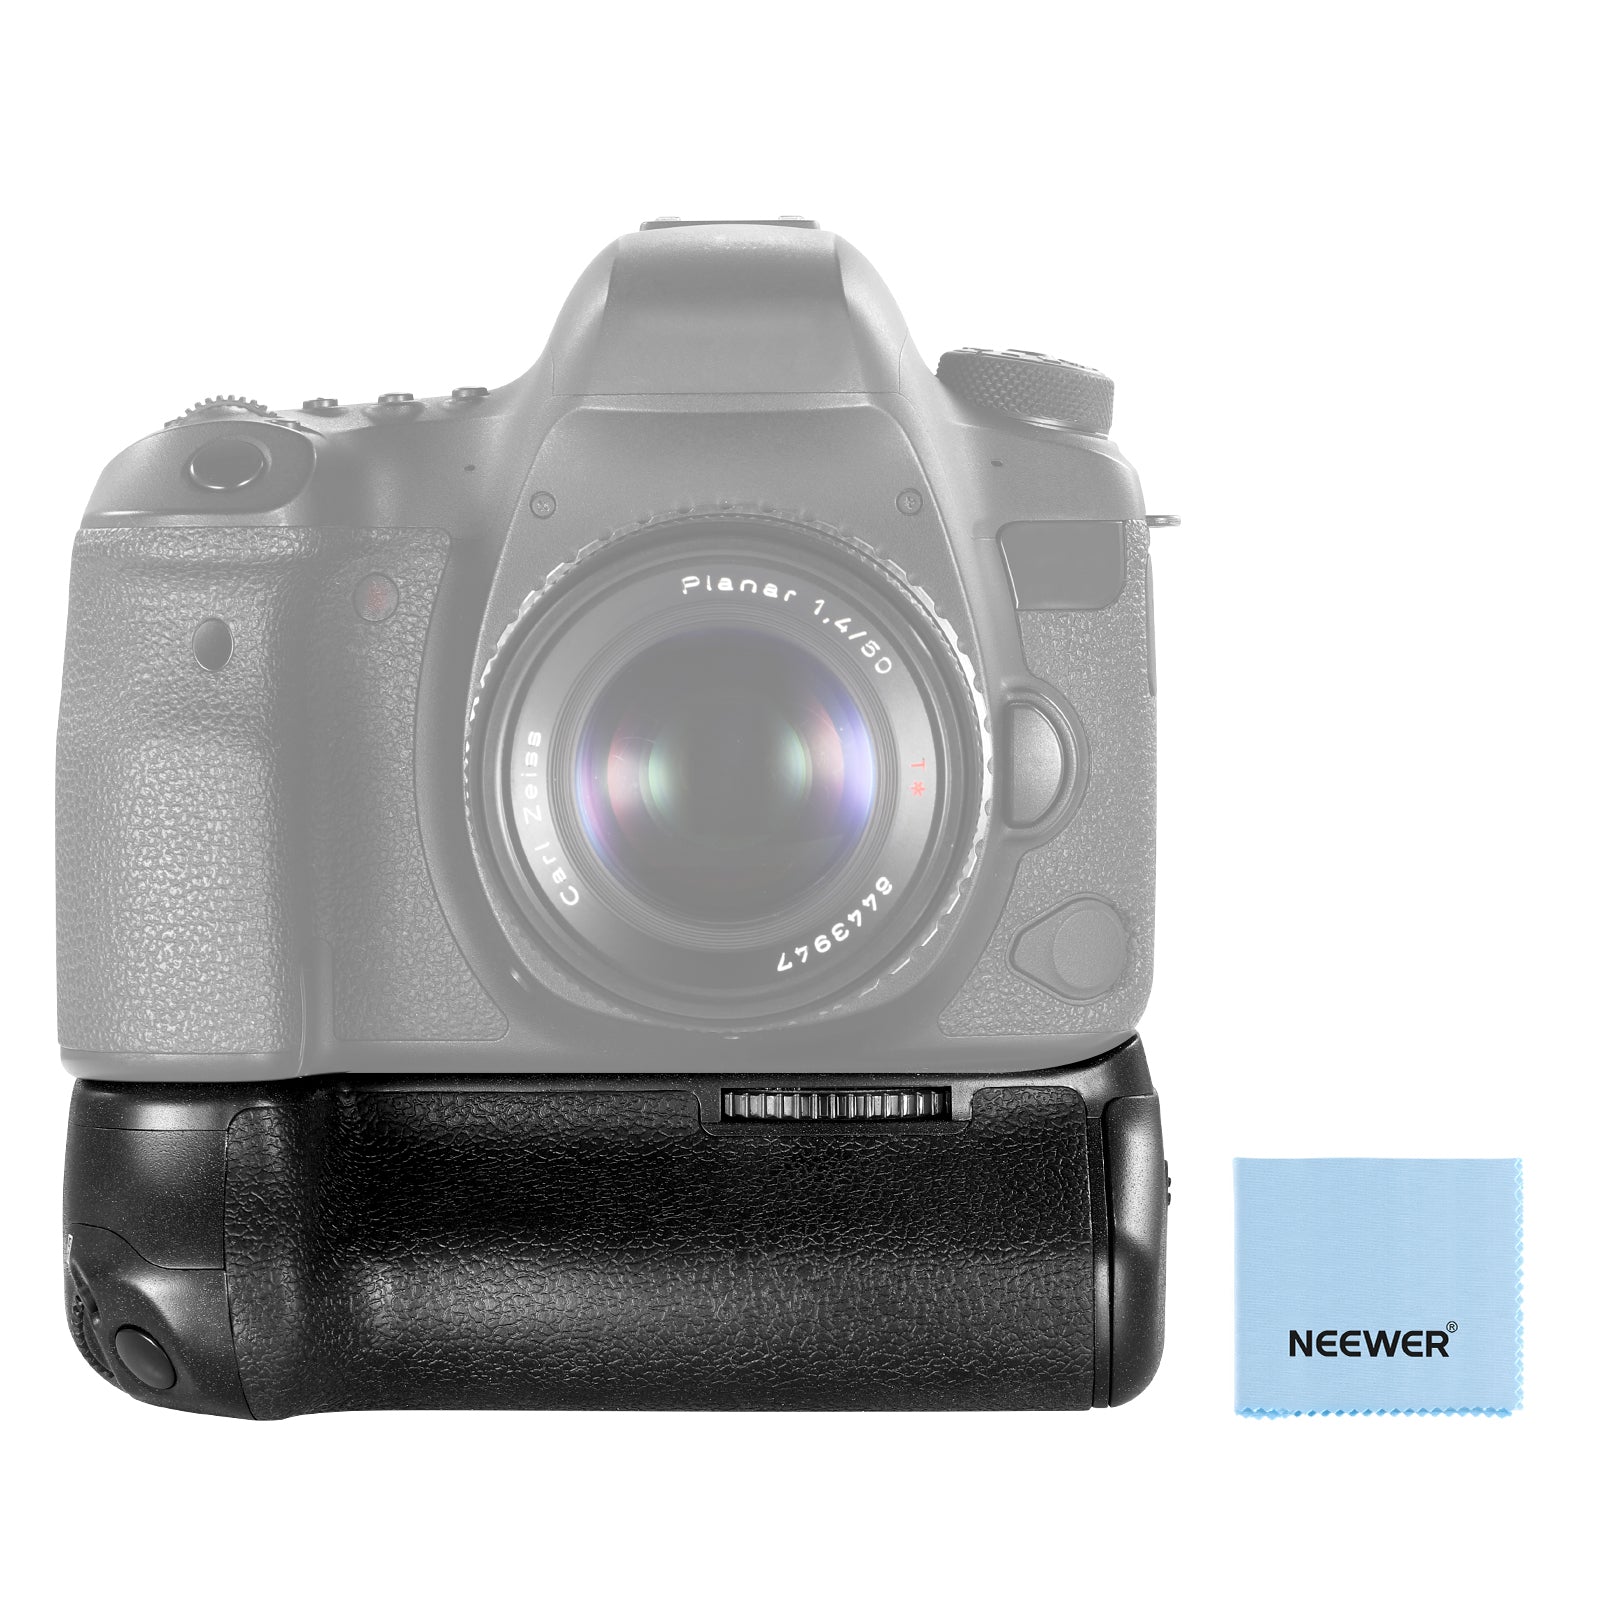 NEEWER BG-E21 Battery Grip Replacement For Canon 6D Mark II DSLR Camera